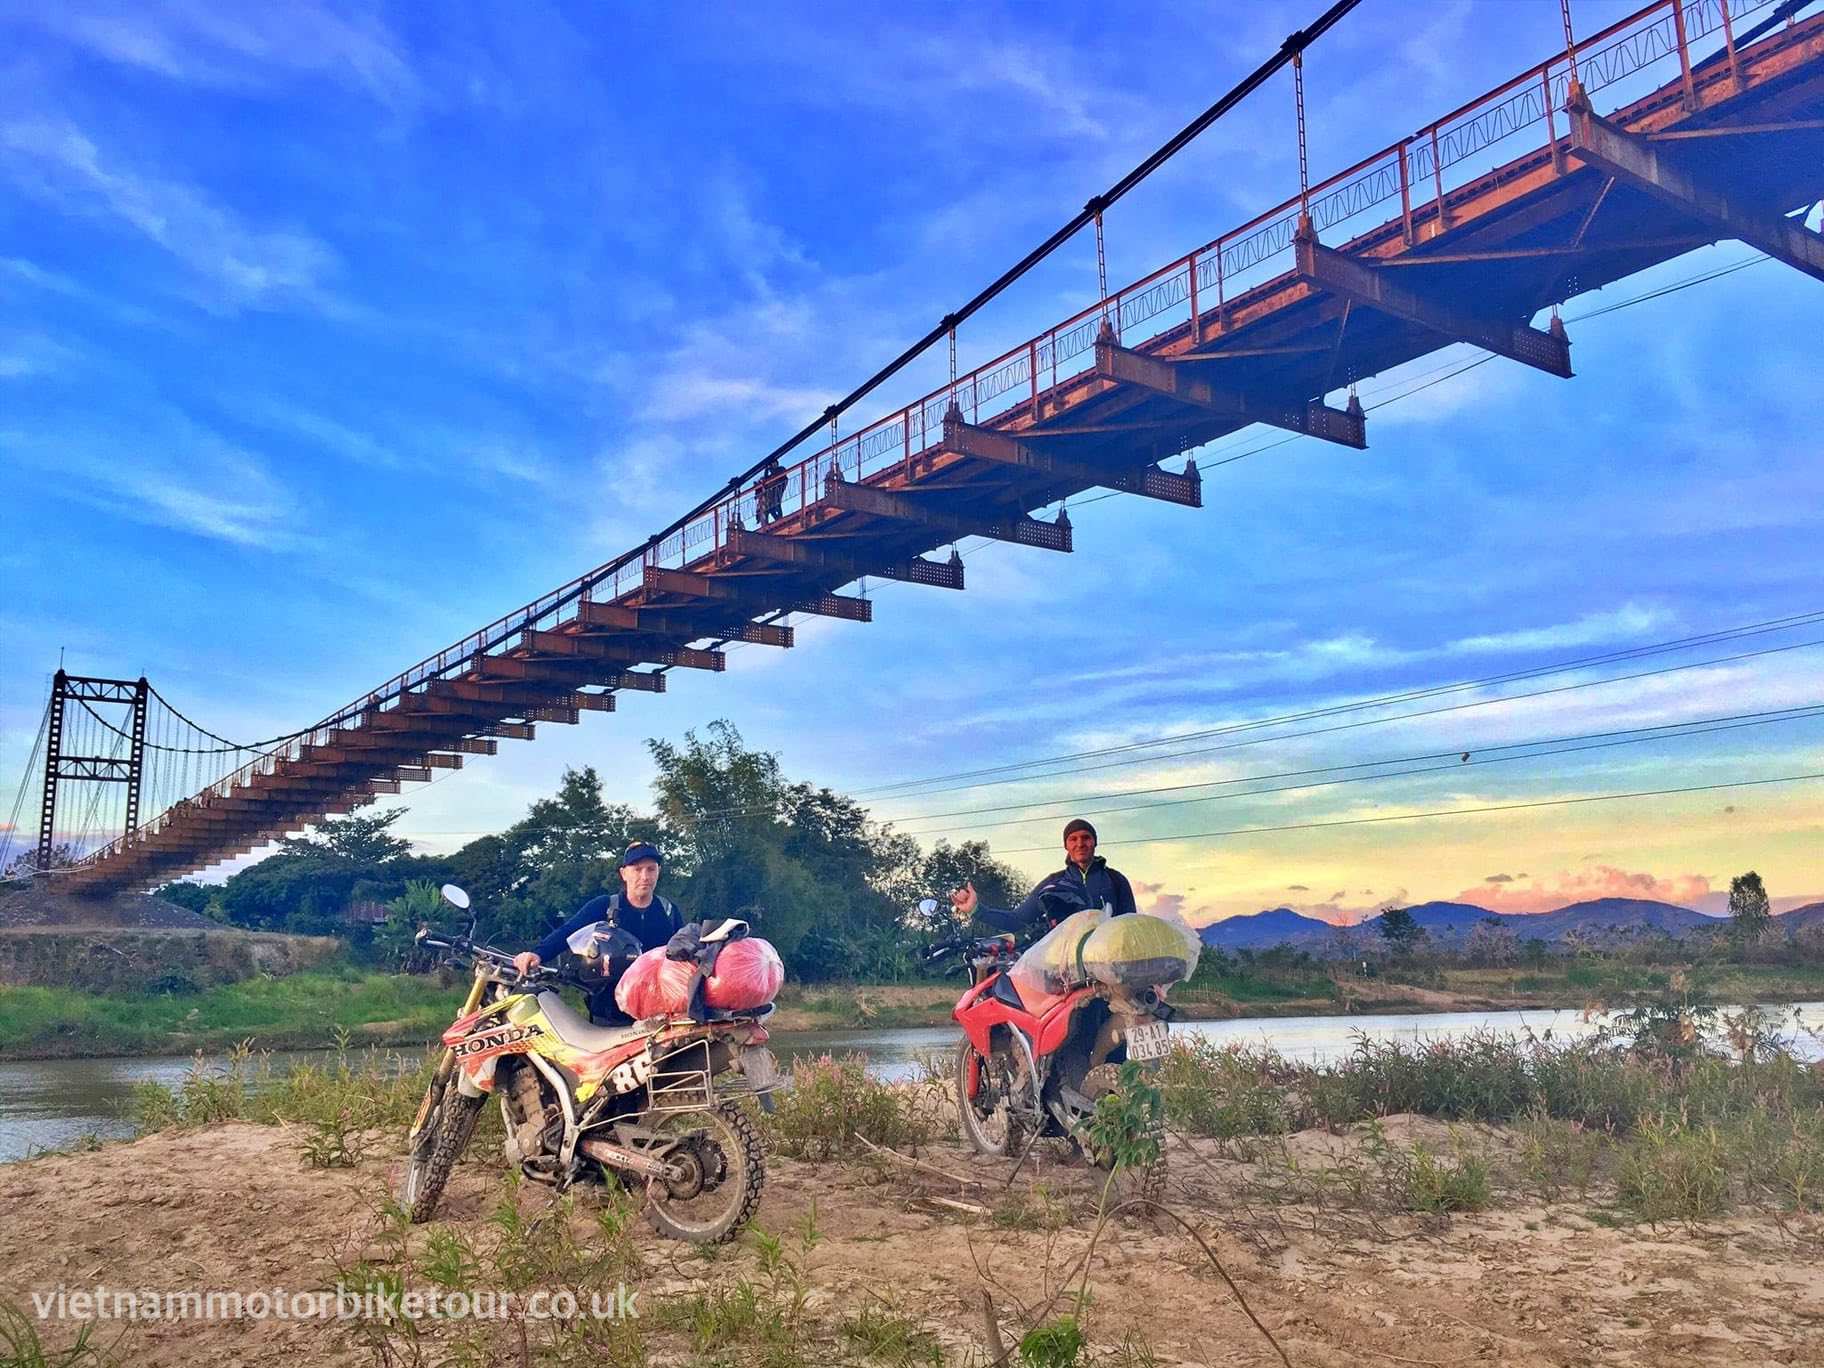 dalat motorbike tour to bao loc mui ne kon tum 2 - Top 10 Reasons to Book a Top-Gear Motorbike Trip from Hanoi to Saigon on Ho Chi Minh trail and along the coast